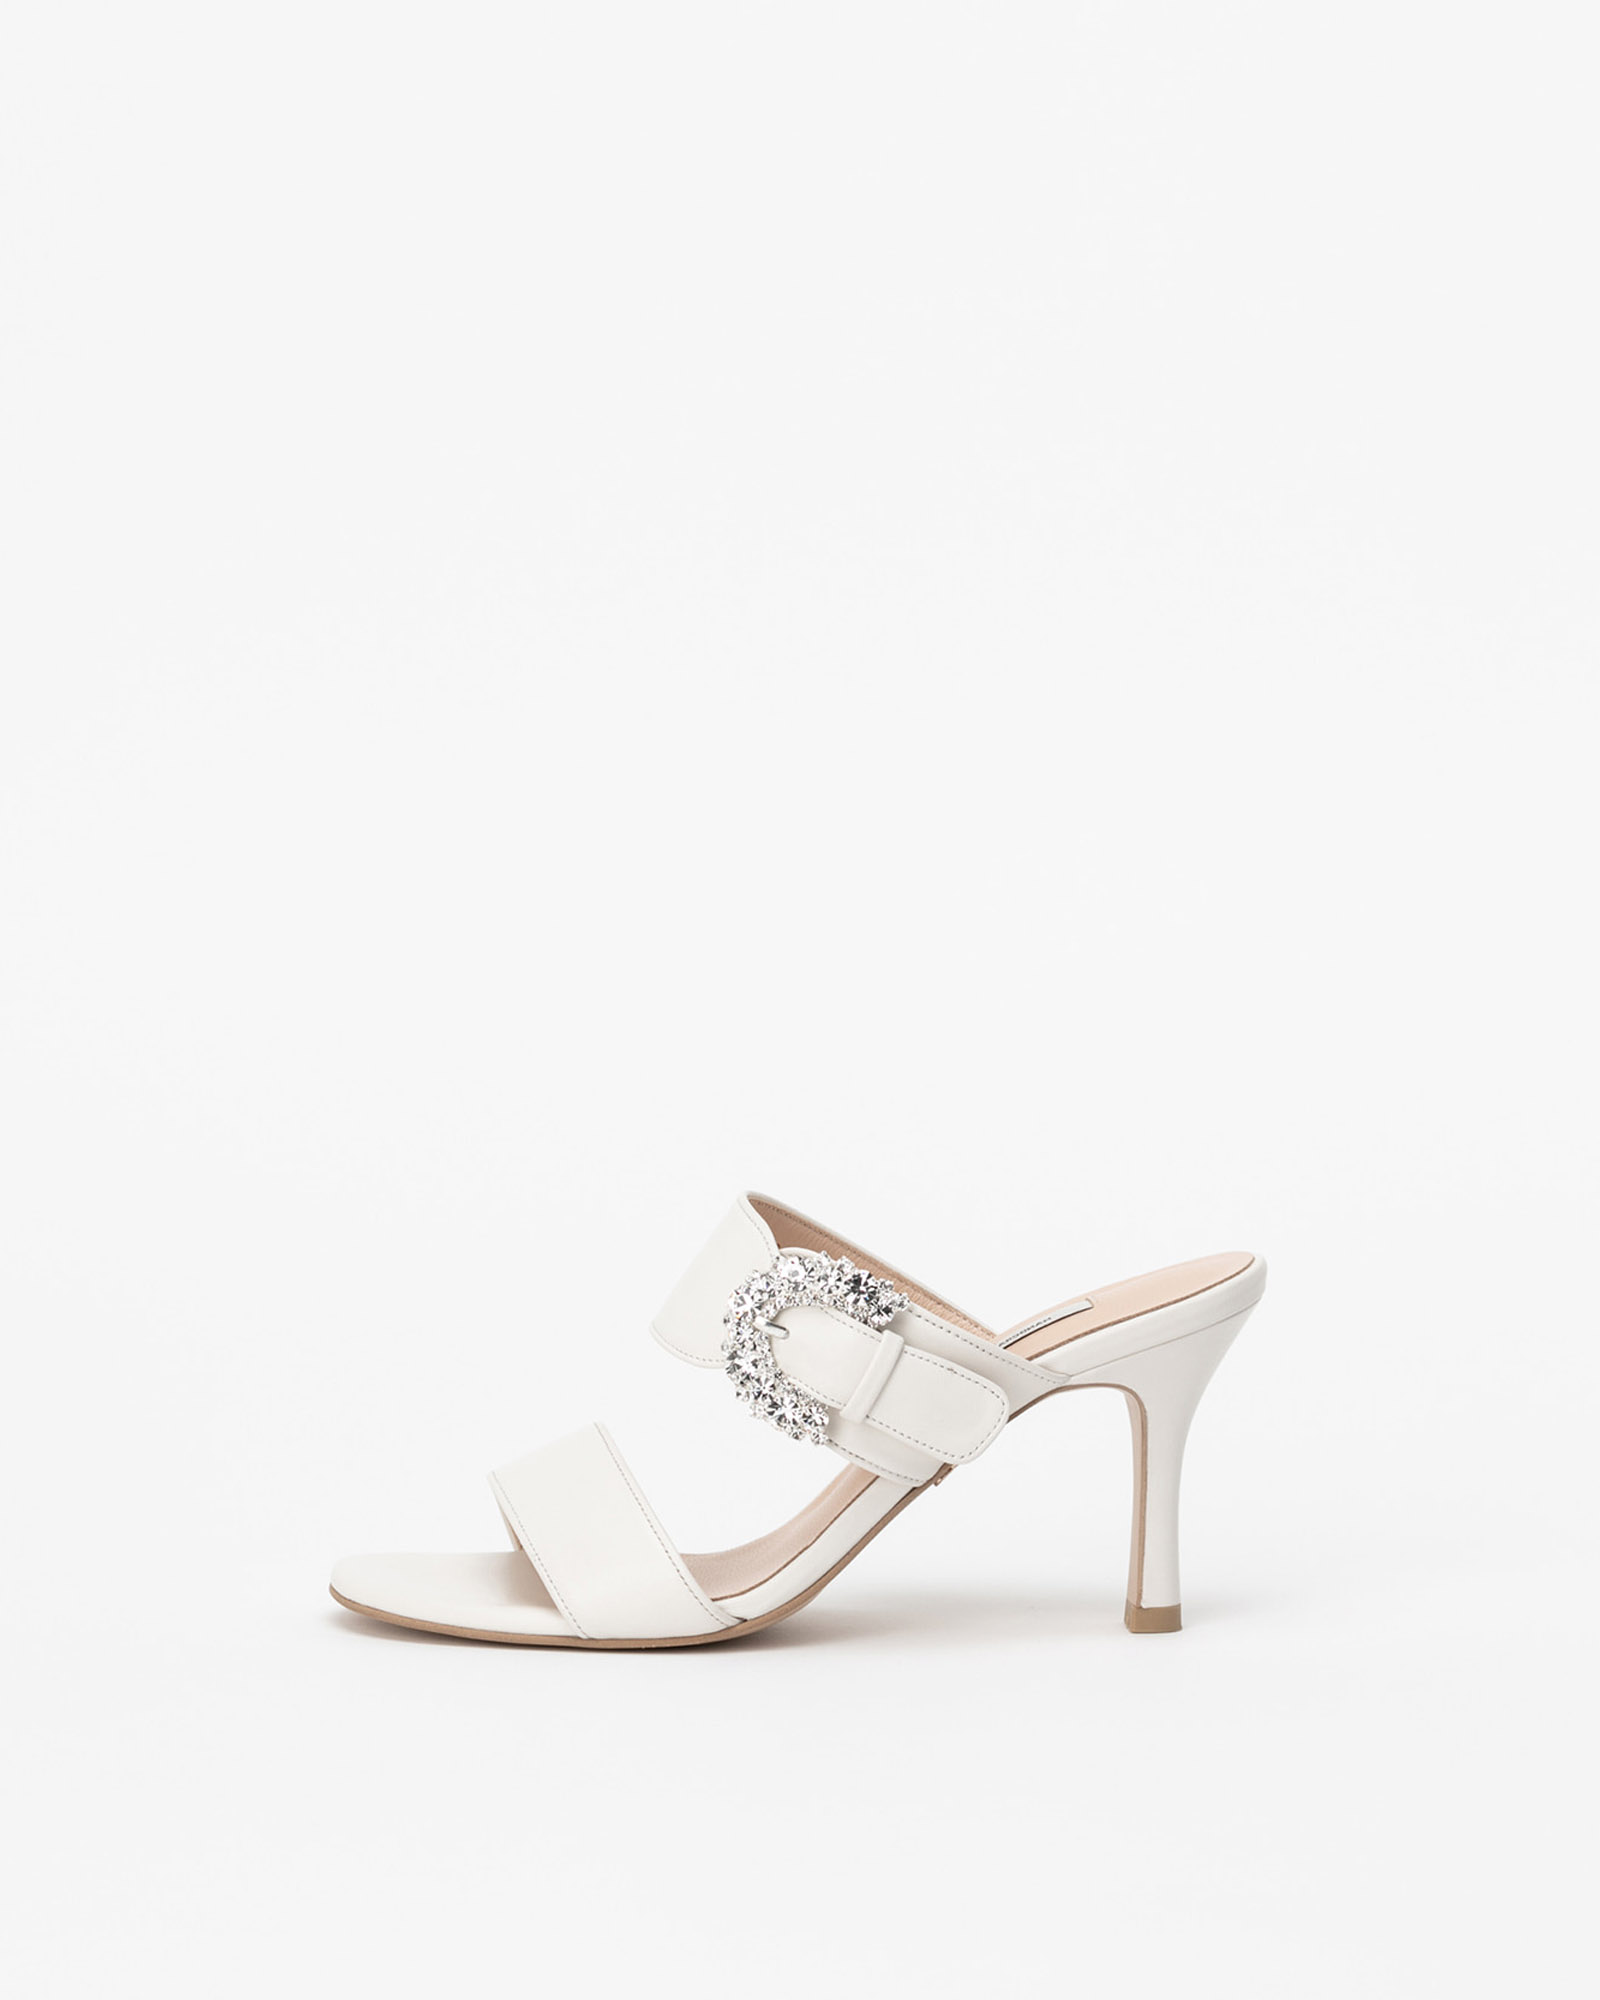 Fera Embellished Mule Sandals in Pure White